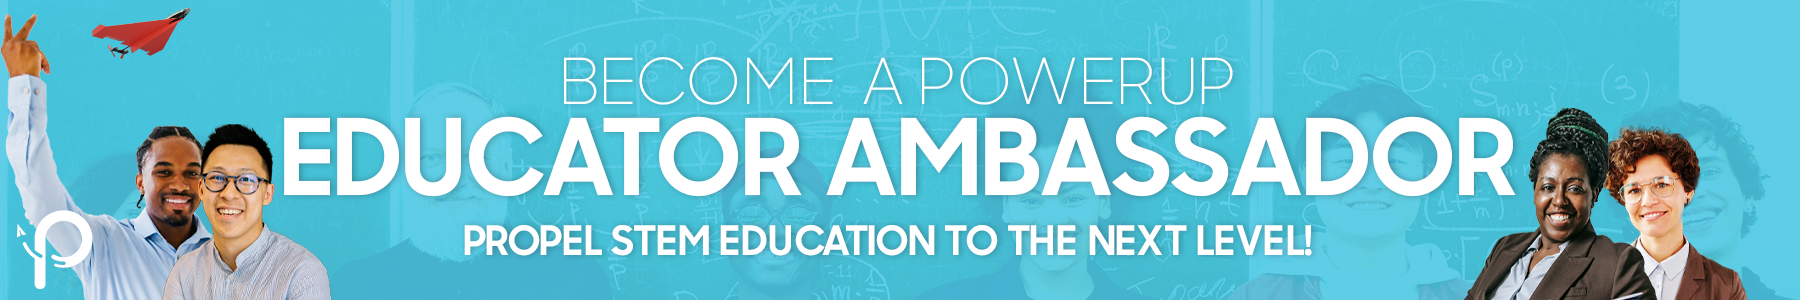 Educator Ambassador | POWERUP